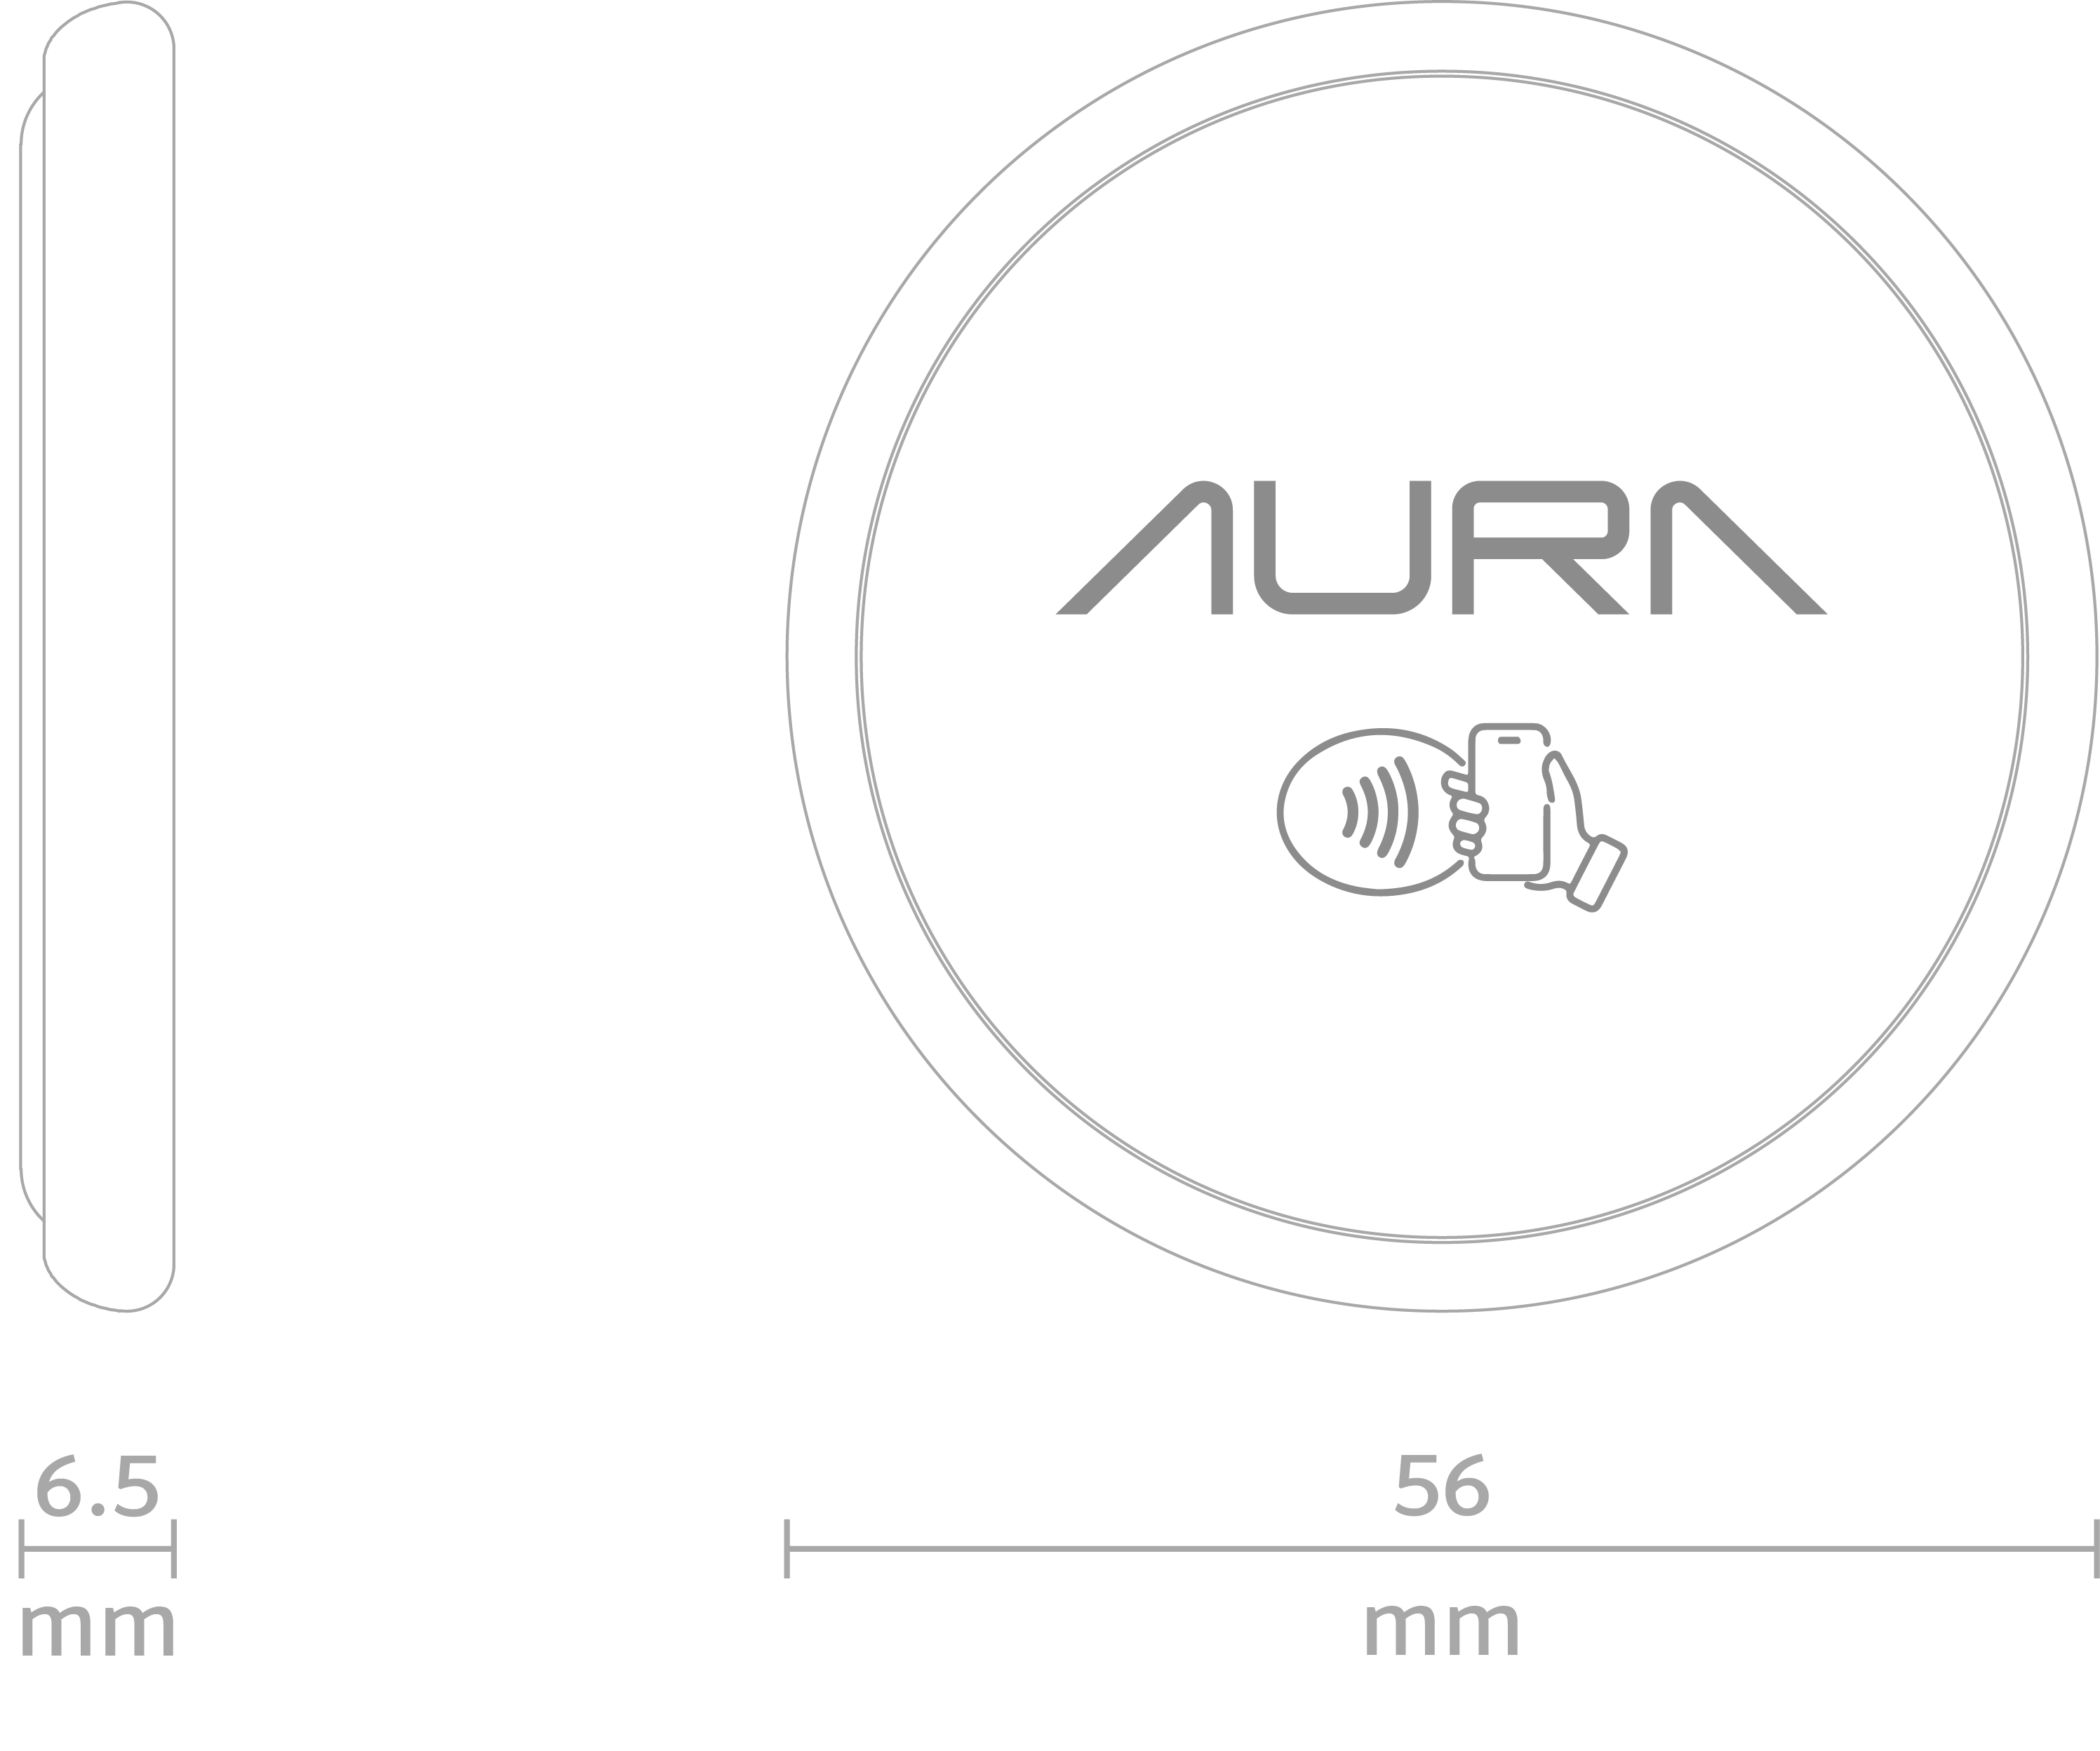 Aura specificatons